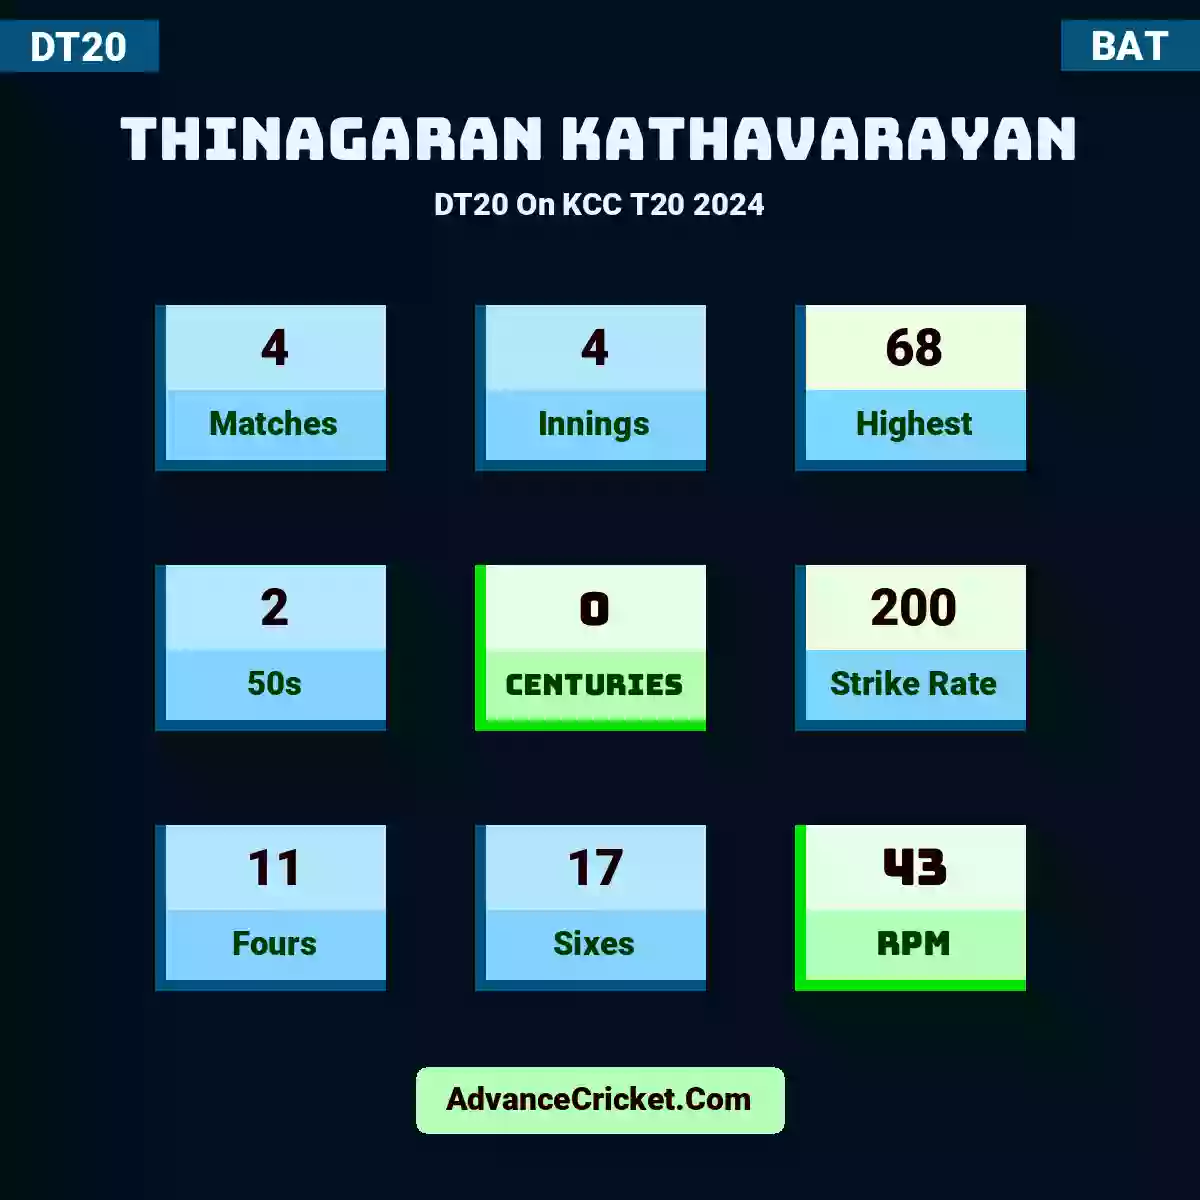 Thinagaran Kathavarayan DT20  On KCC T20 2024, Thinagaran Kathavarayan played 4 matches, scored 68 runs as highest, 2 half-centuries, and 0 centuries, with a strike rate of 200. T.Kathavarayan hit 11 fours and 17 sixes, with an RPM of 43.